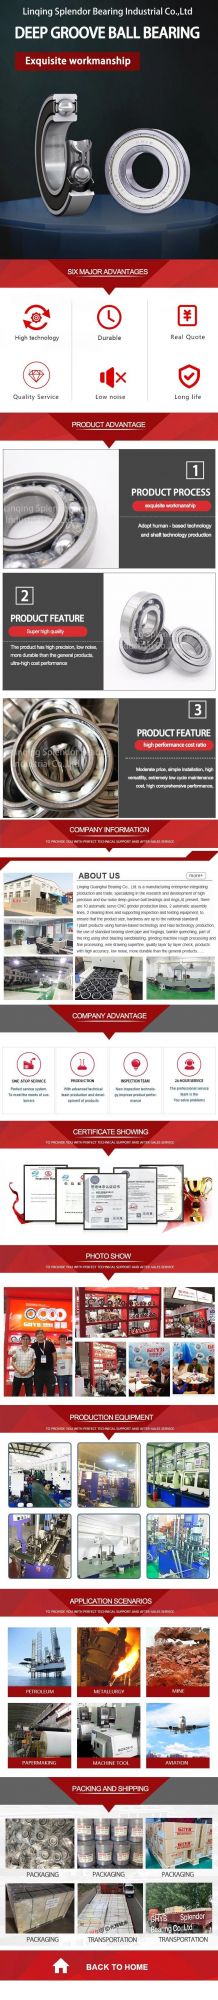 China Factory Distributor Supplier of Deep Groove Ball Bearings for Motors, Compressors, Alternators 6307-2rz/P6/Z2V2